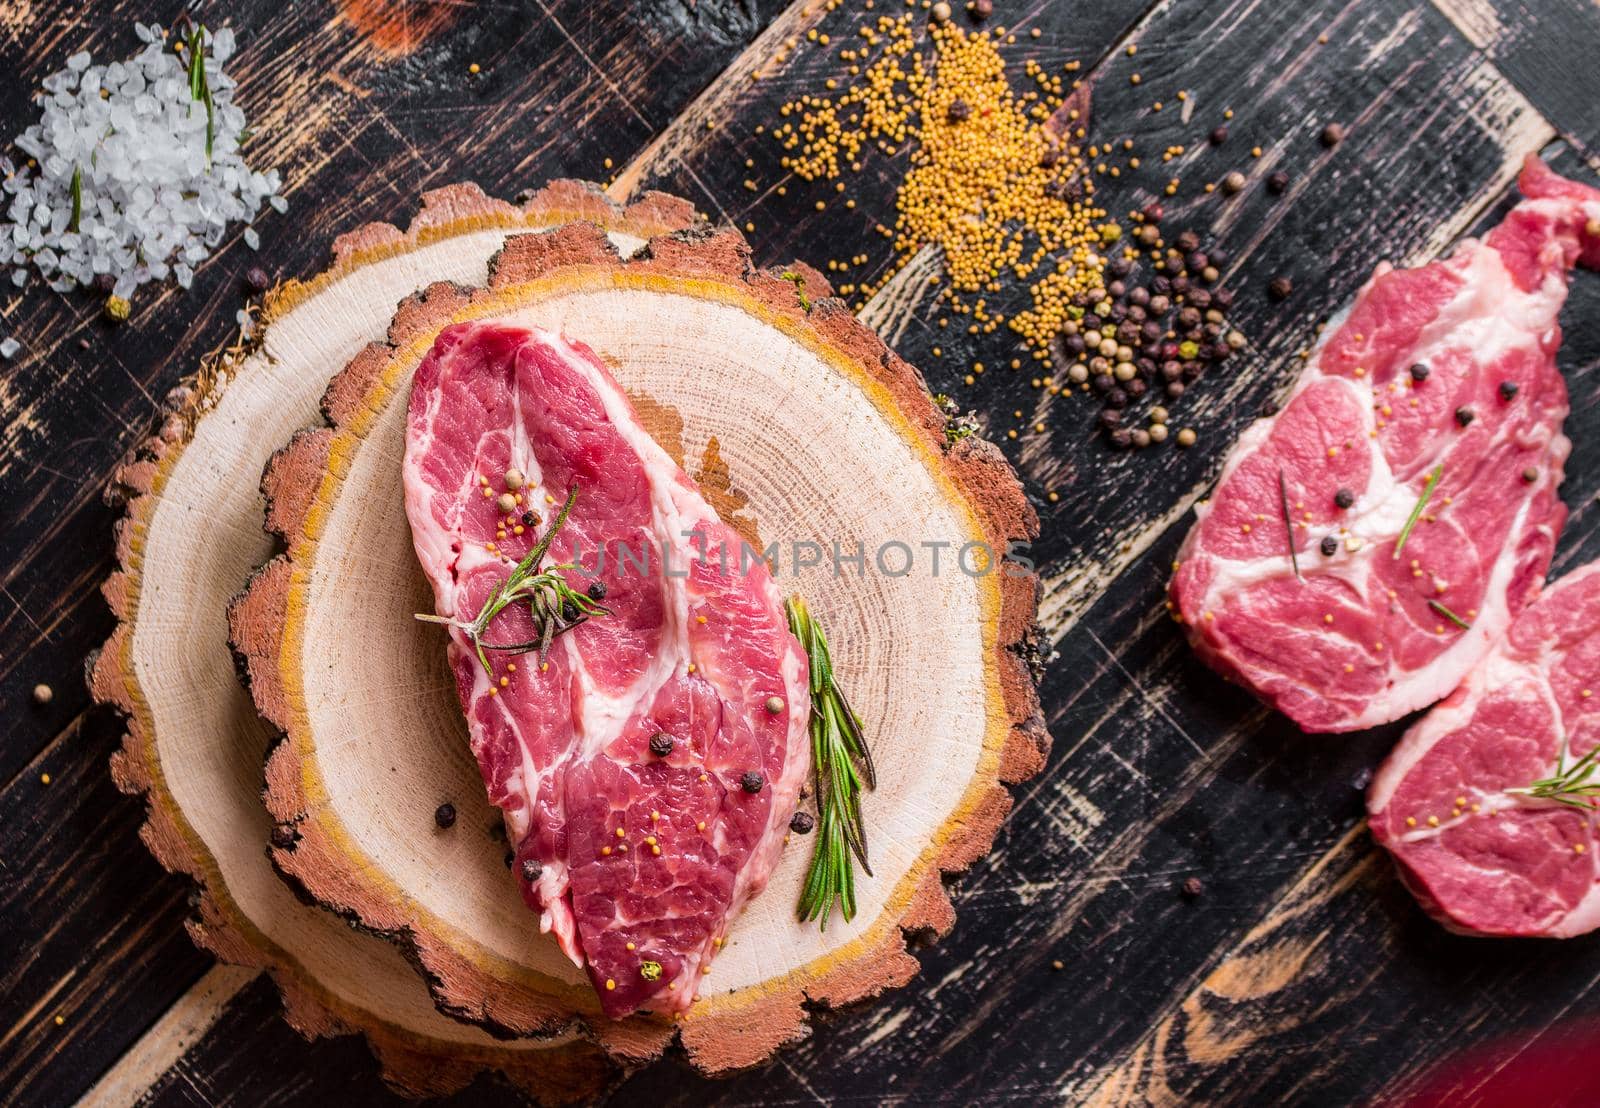 Raw juicy meat steak on dark wooden background ready to roasting by its_al_dente